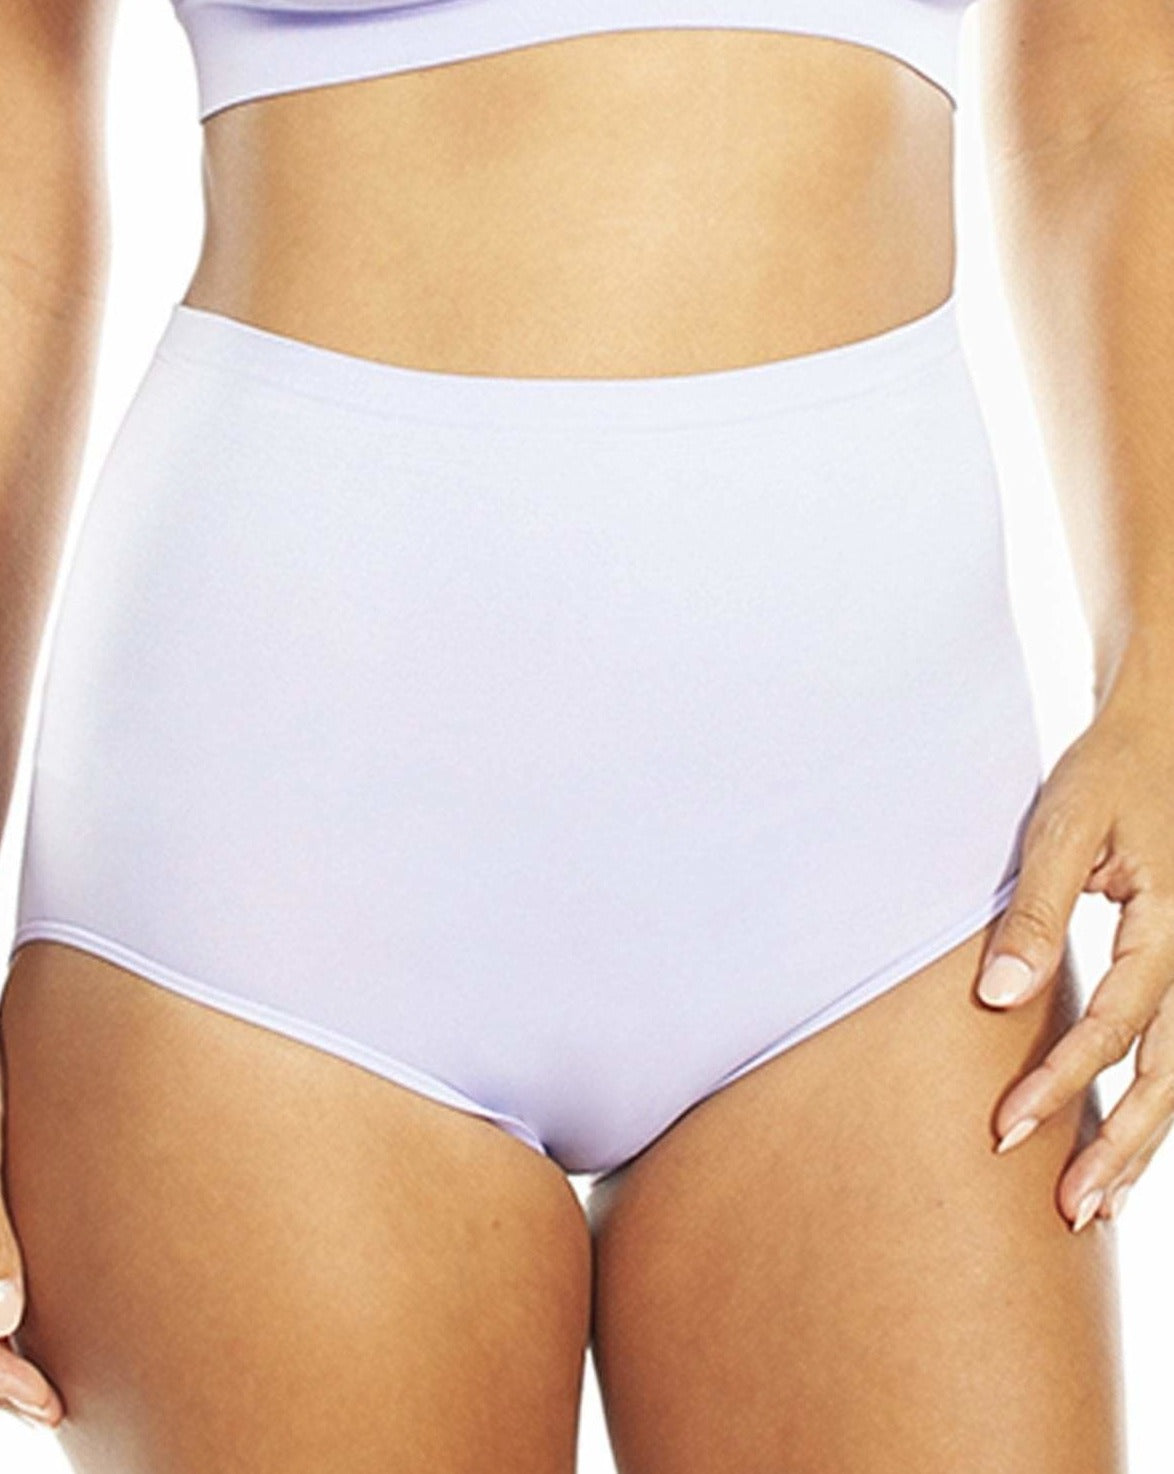 Rhian Hip Stretch Panties for women plus size seamless Panty Full